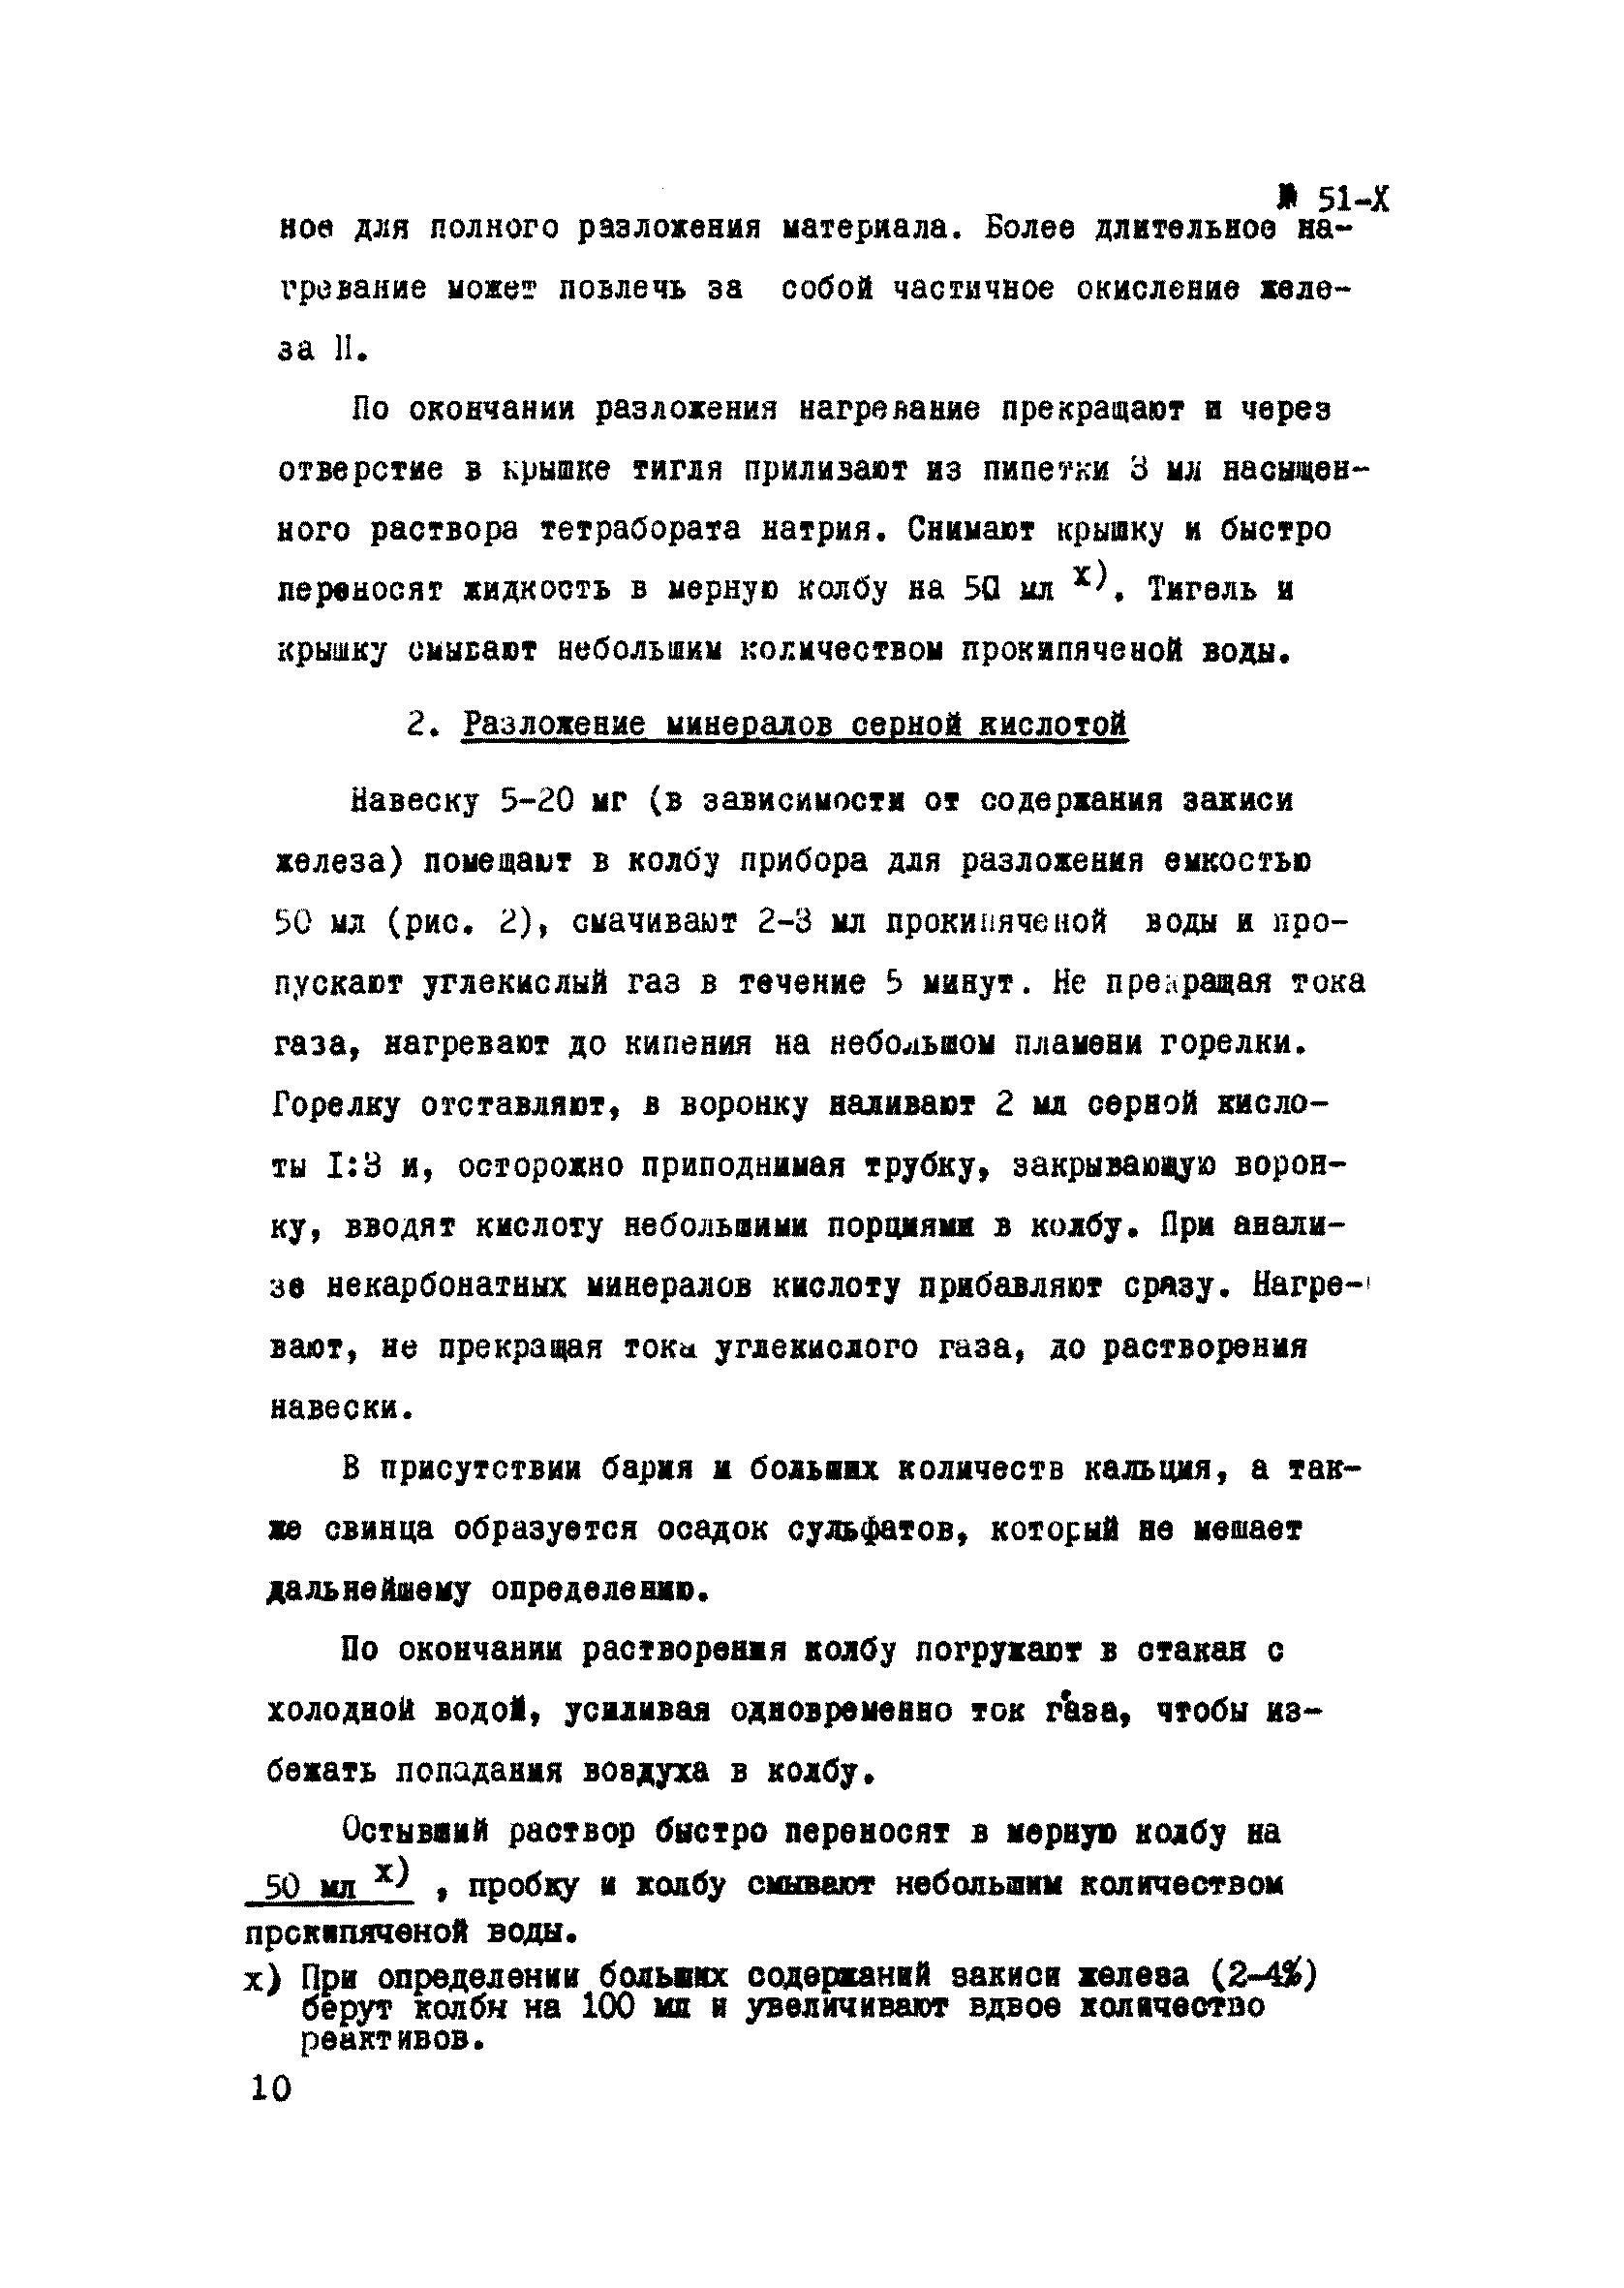 Инструкция НСАМ 51-Х